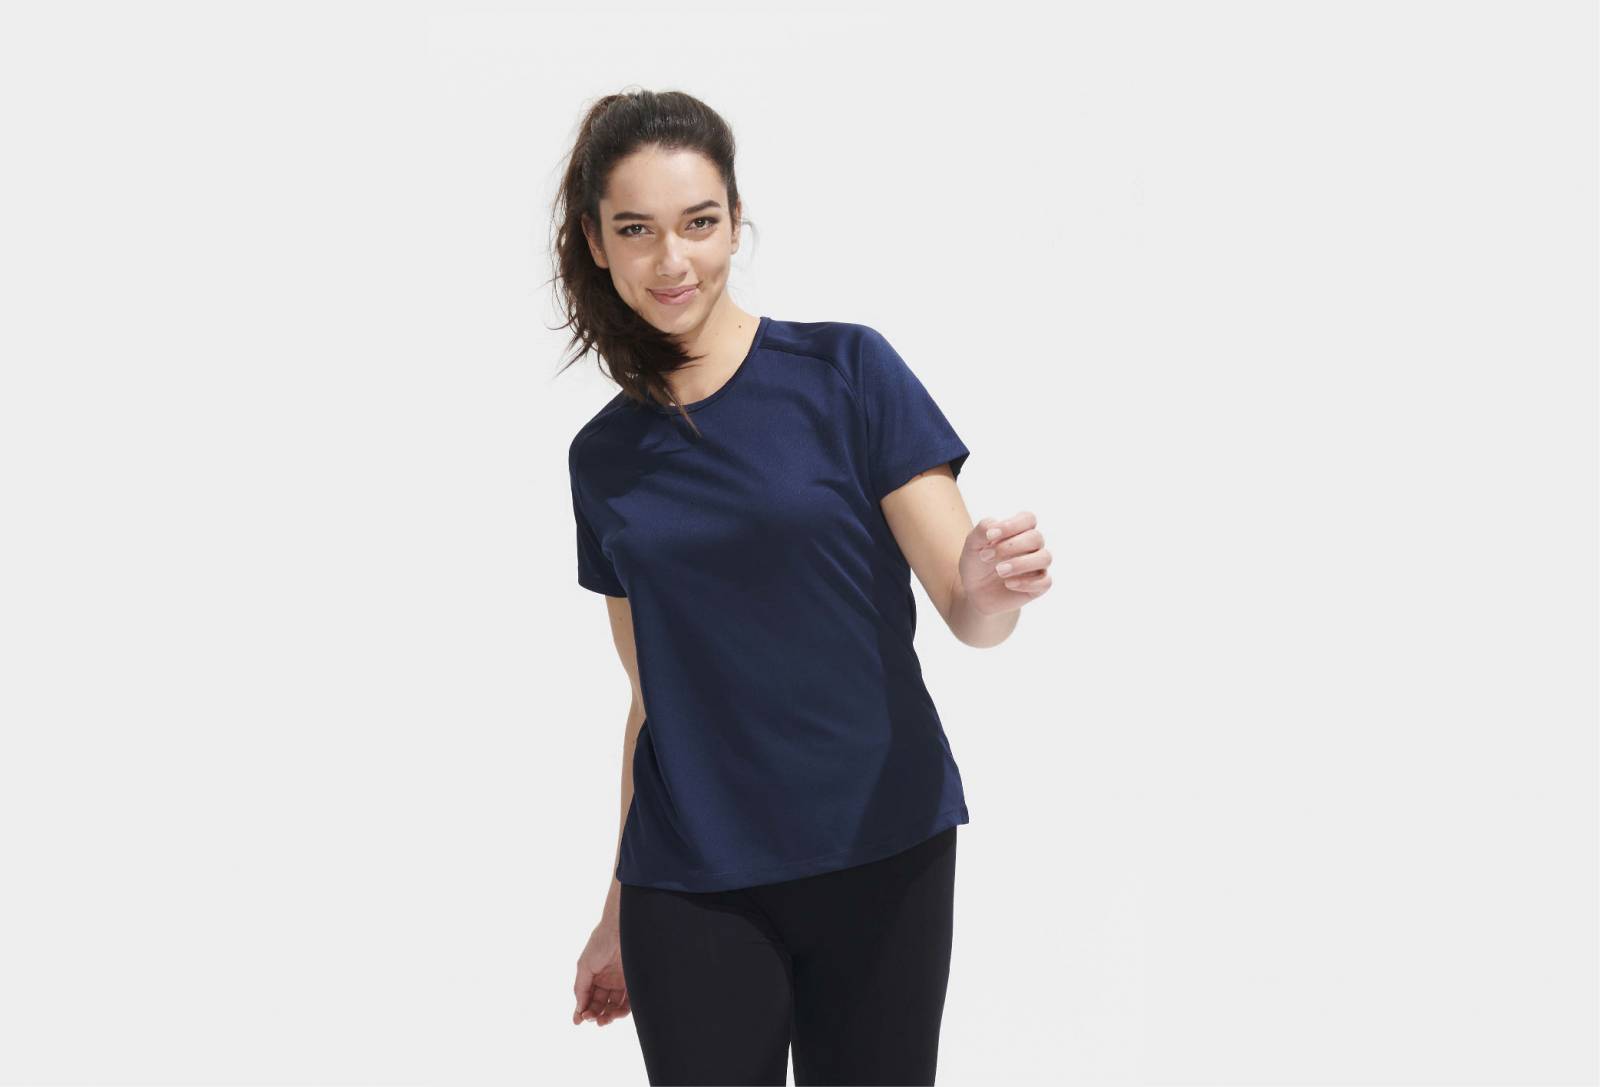 Tee-shirt running SYDNEY pour femme personnalisable